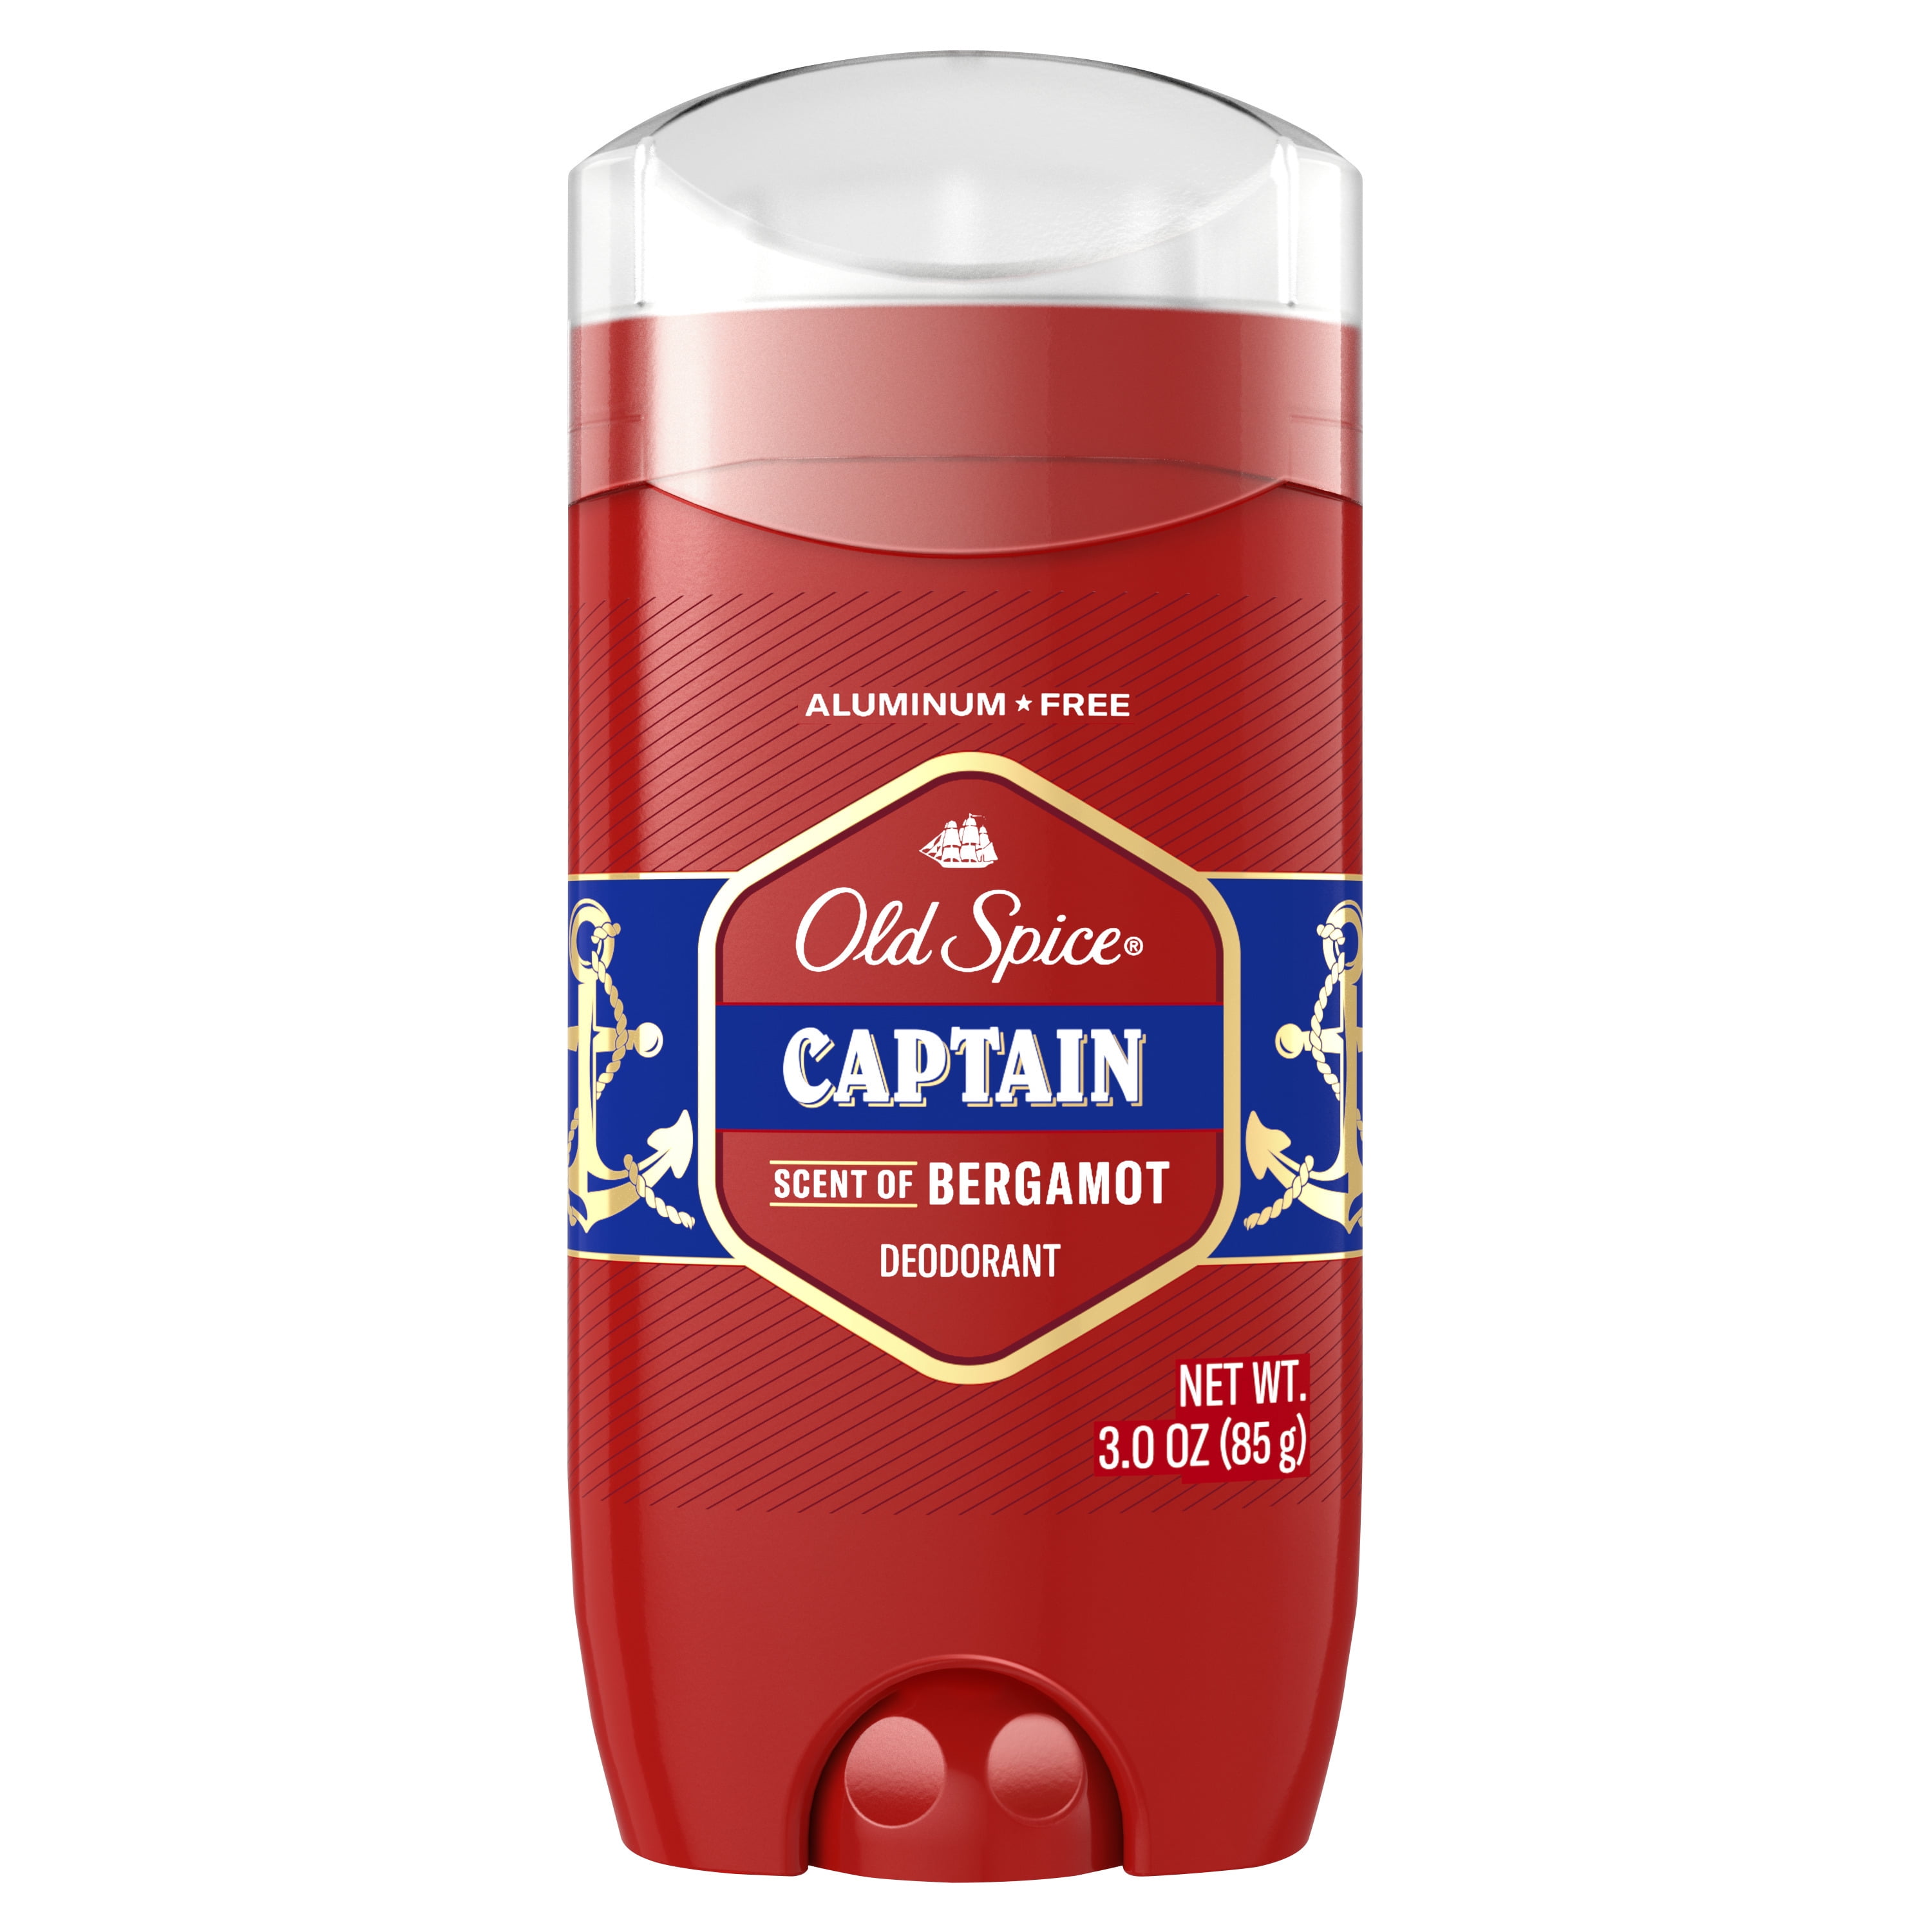 Old Spice Deodorant, Captain, Bravery & Bergamot, Red Collection - 3.0 oz